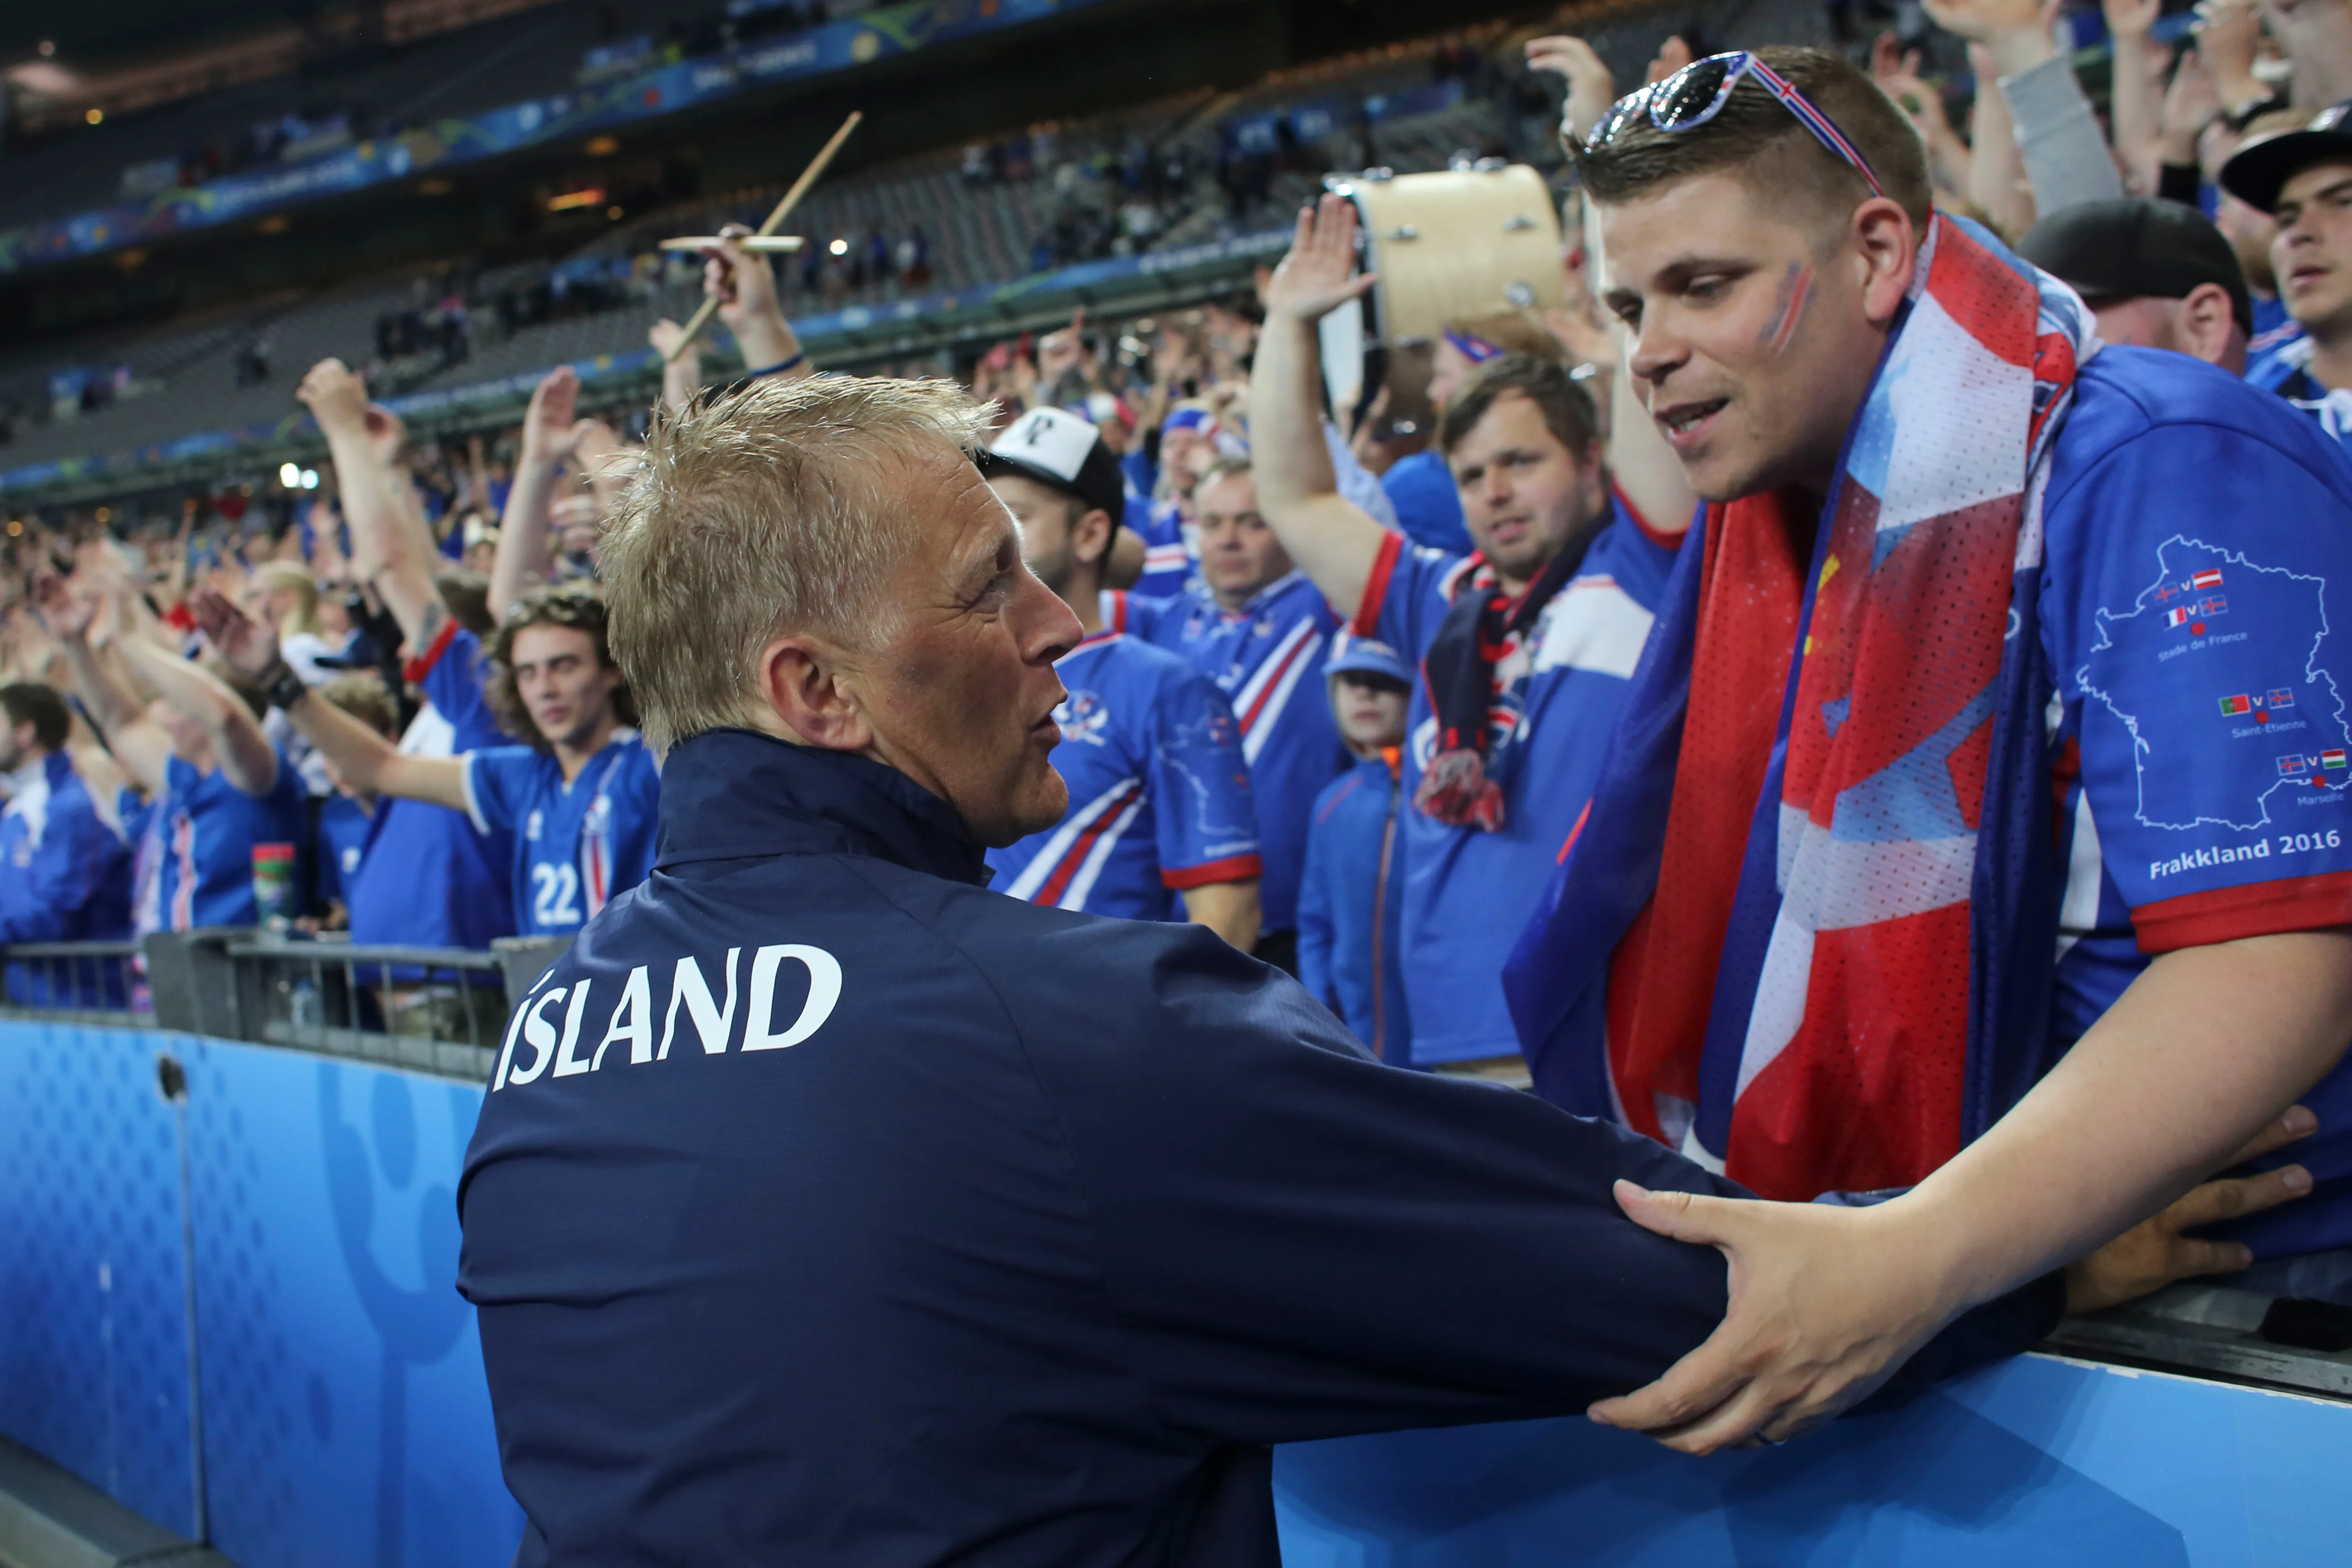 Iceland men's national team Olympic jerseys